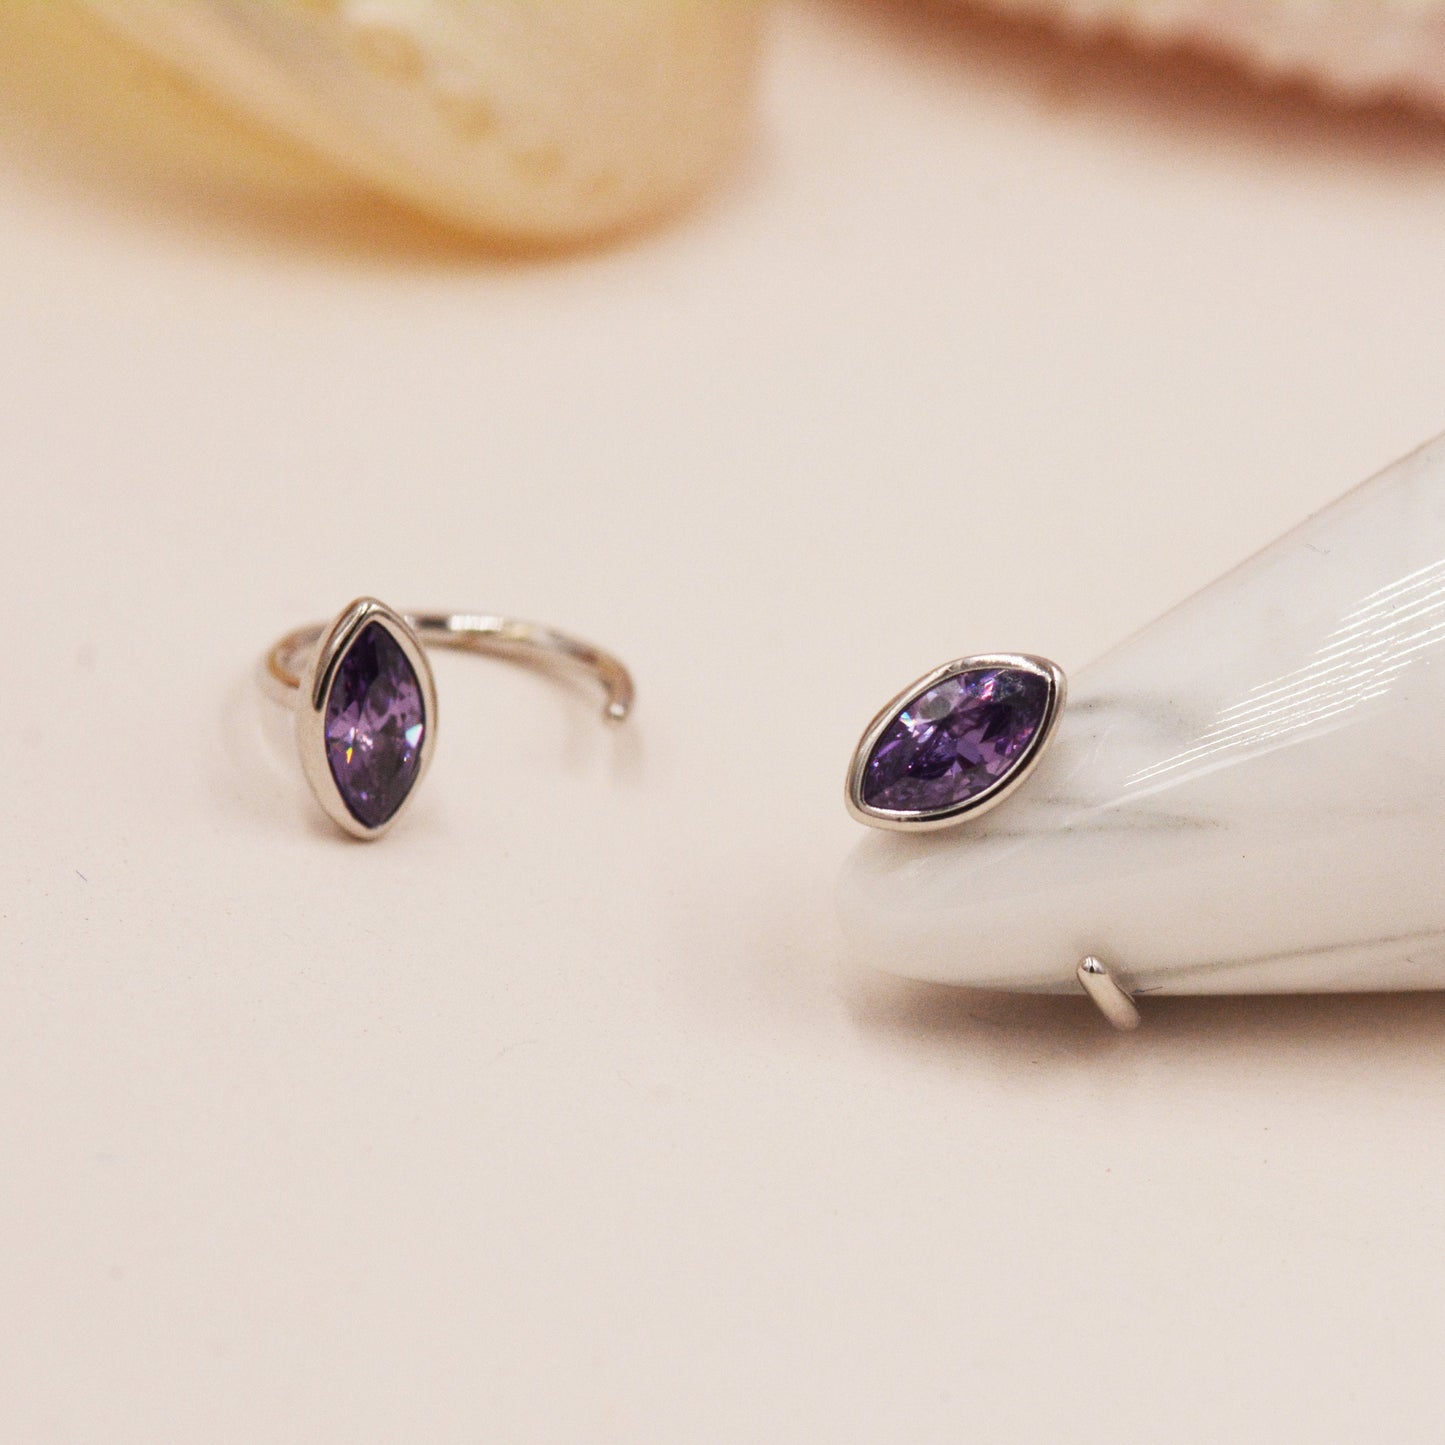 Amethyst Purple Crystal Marquise Pull Through Earrings in Sterling Silver with Lilac CZ -  Petite Stud Earrings or Threader Hoop